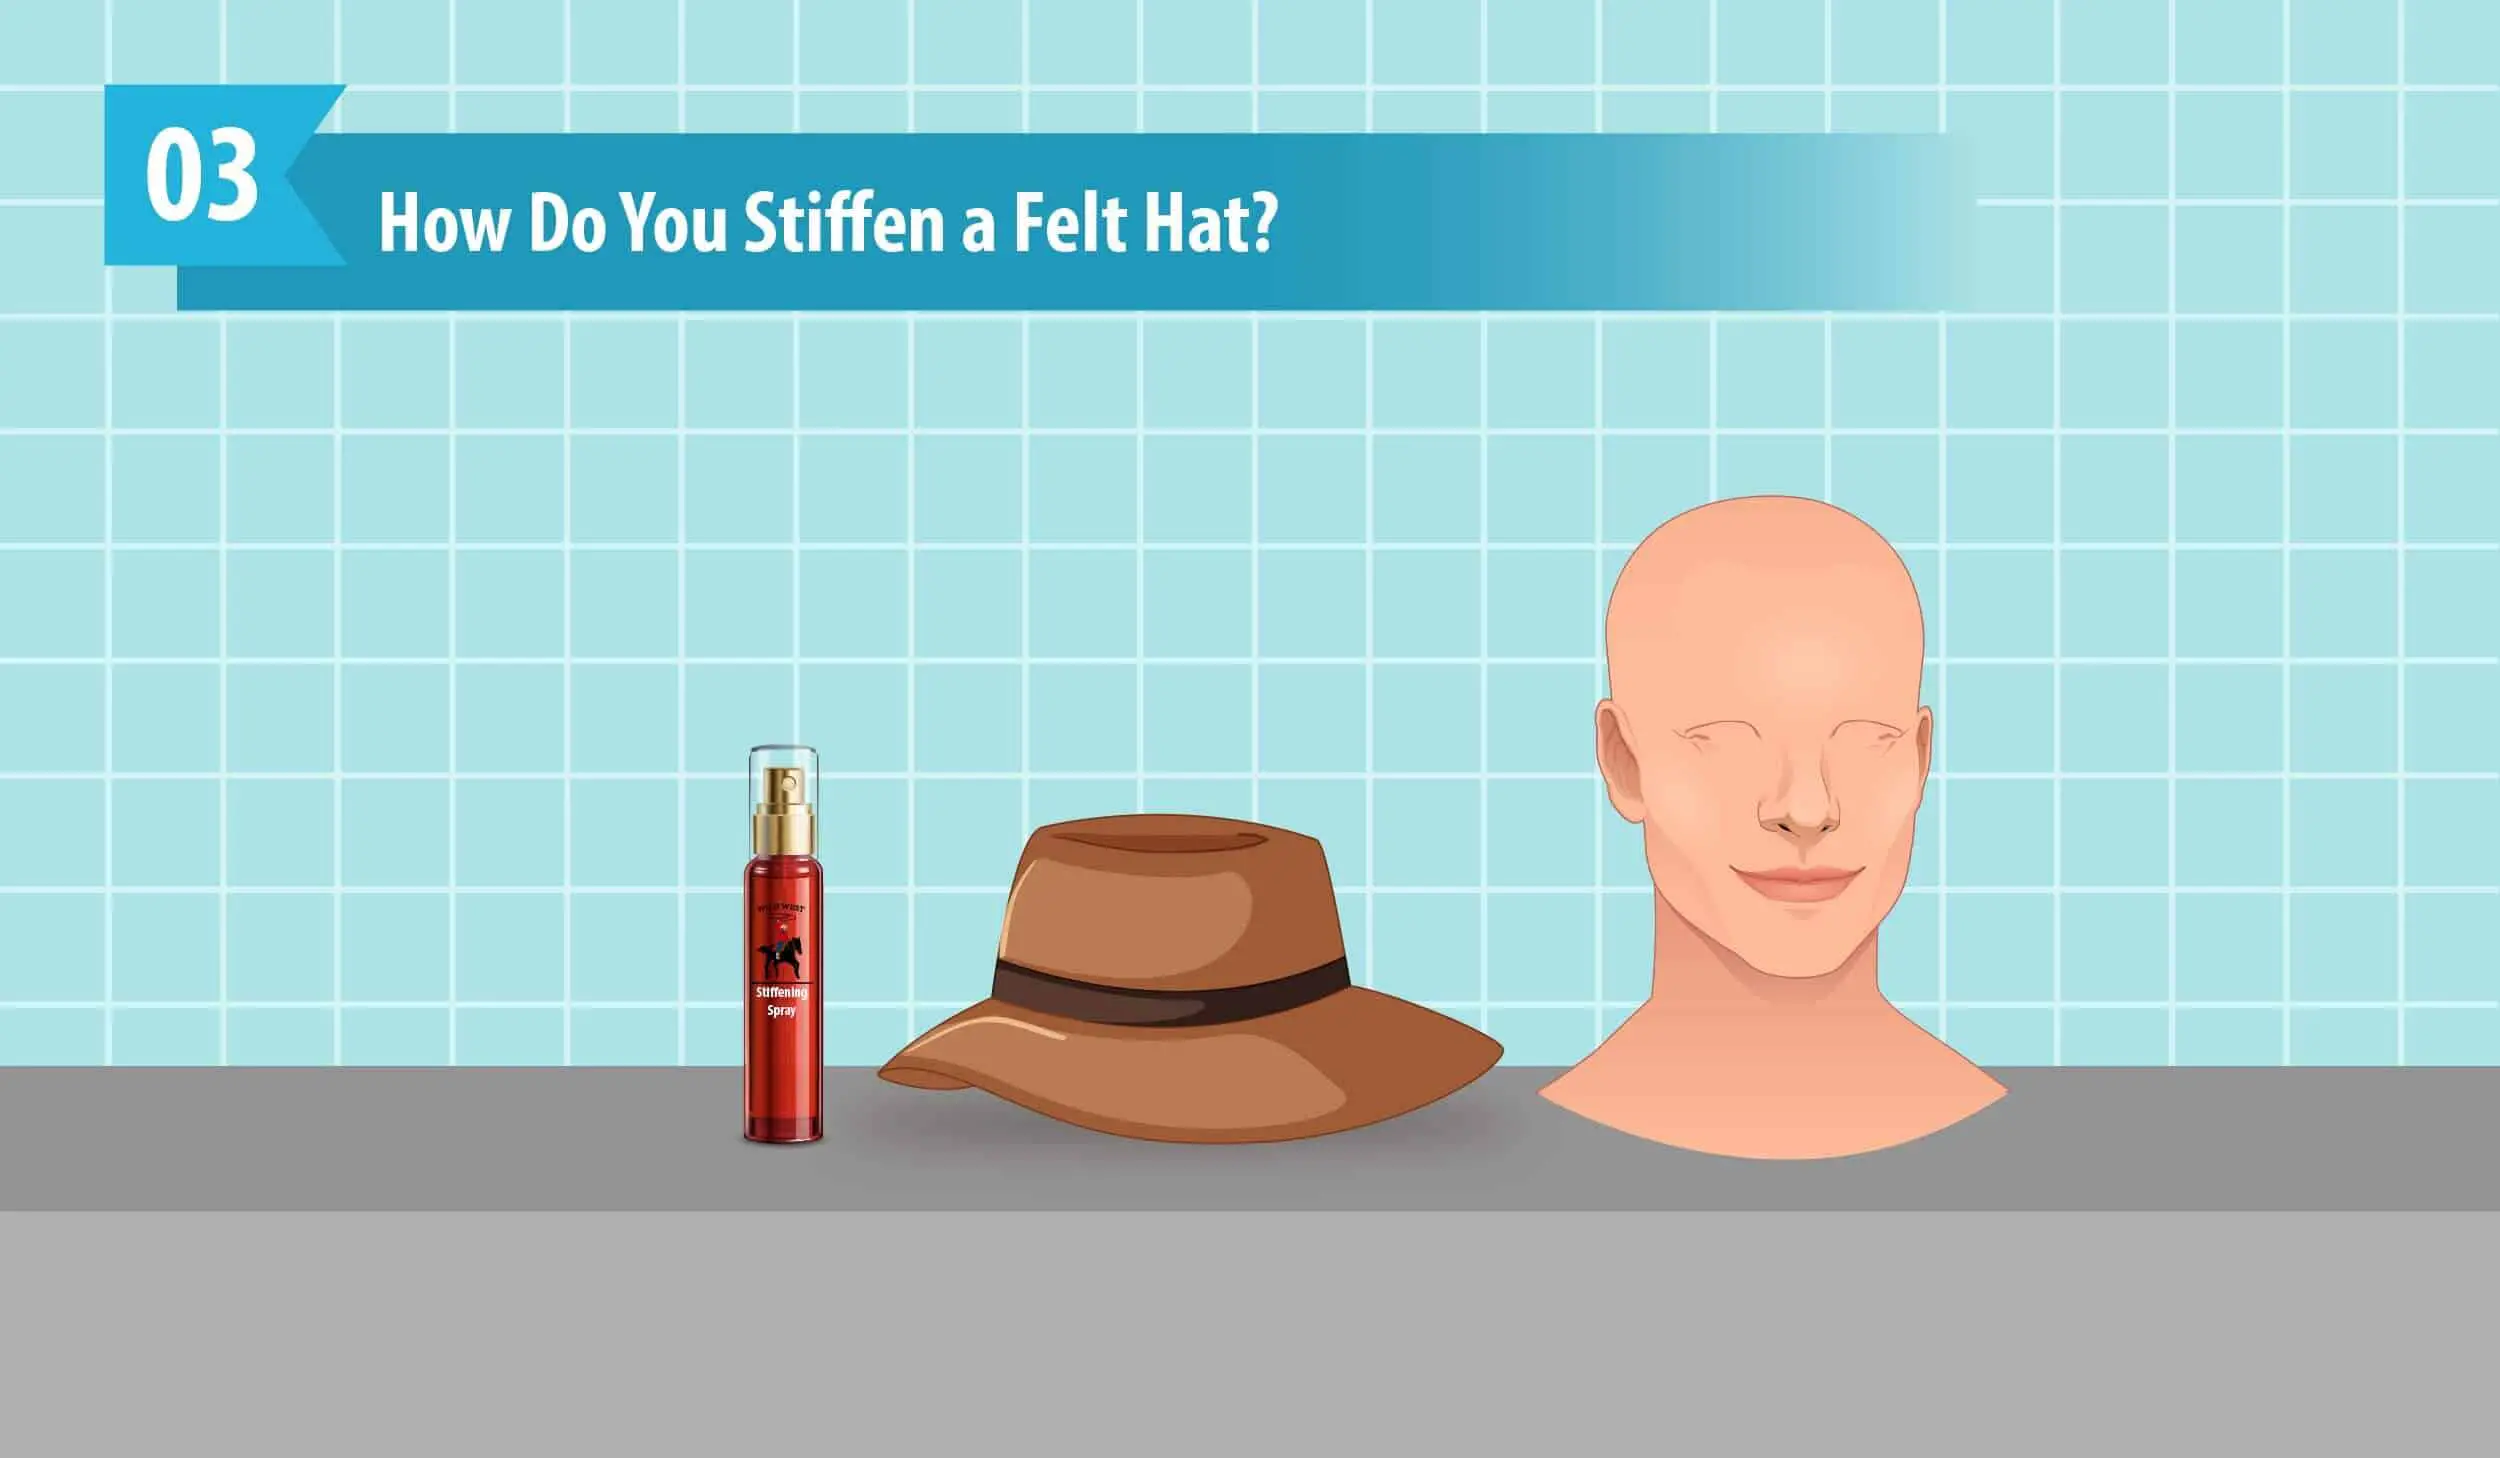 How Do You Stiffen a Felt Hat